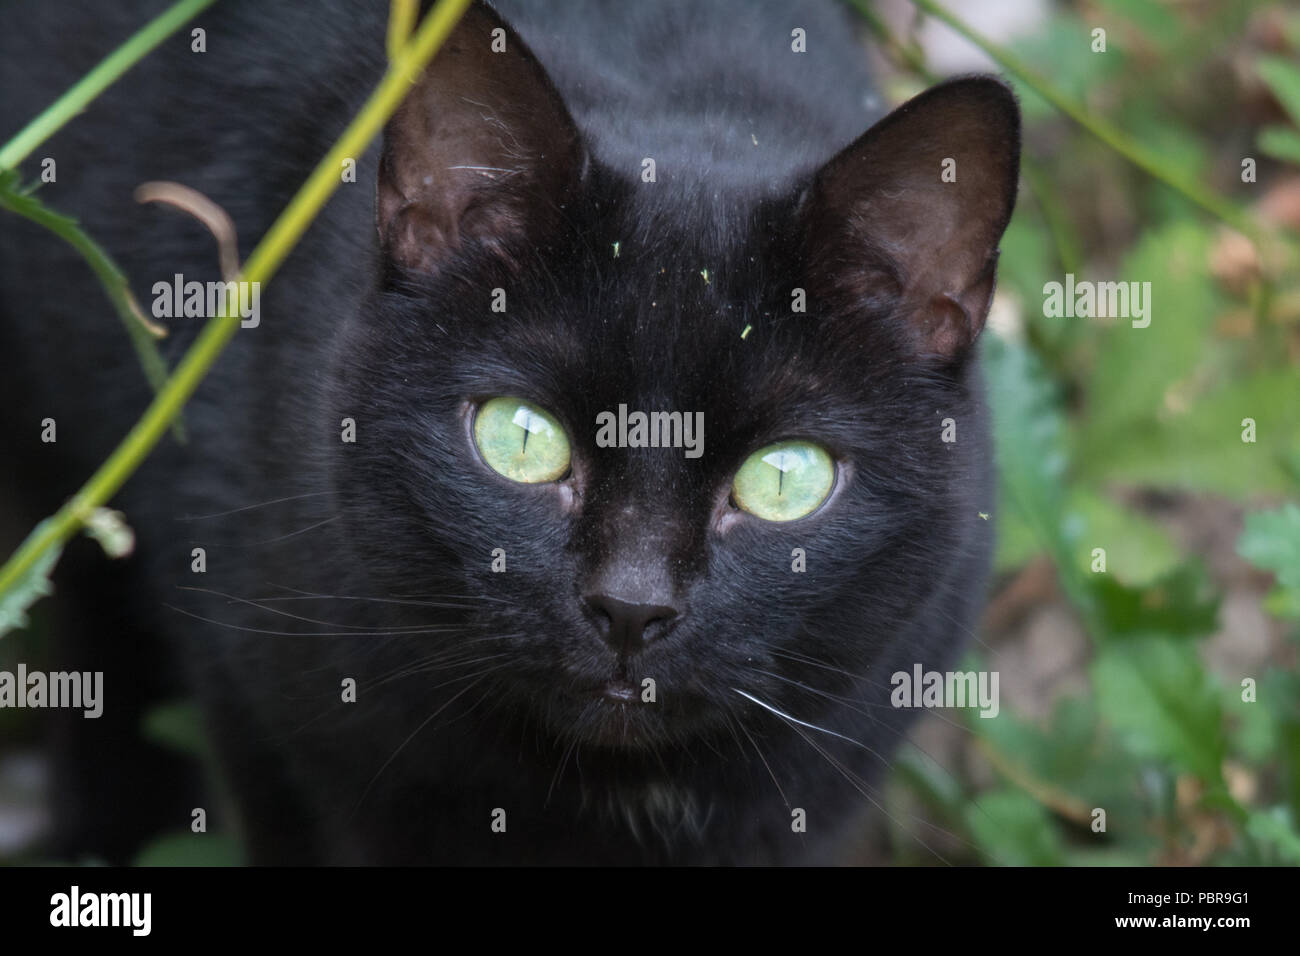 Gato negro con ojos verdes fotografías e imágenes de alta resolución - Alamy